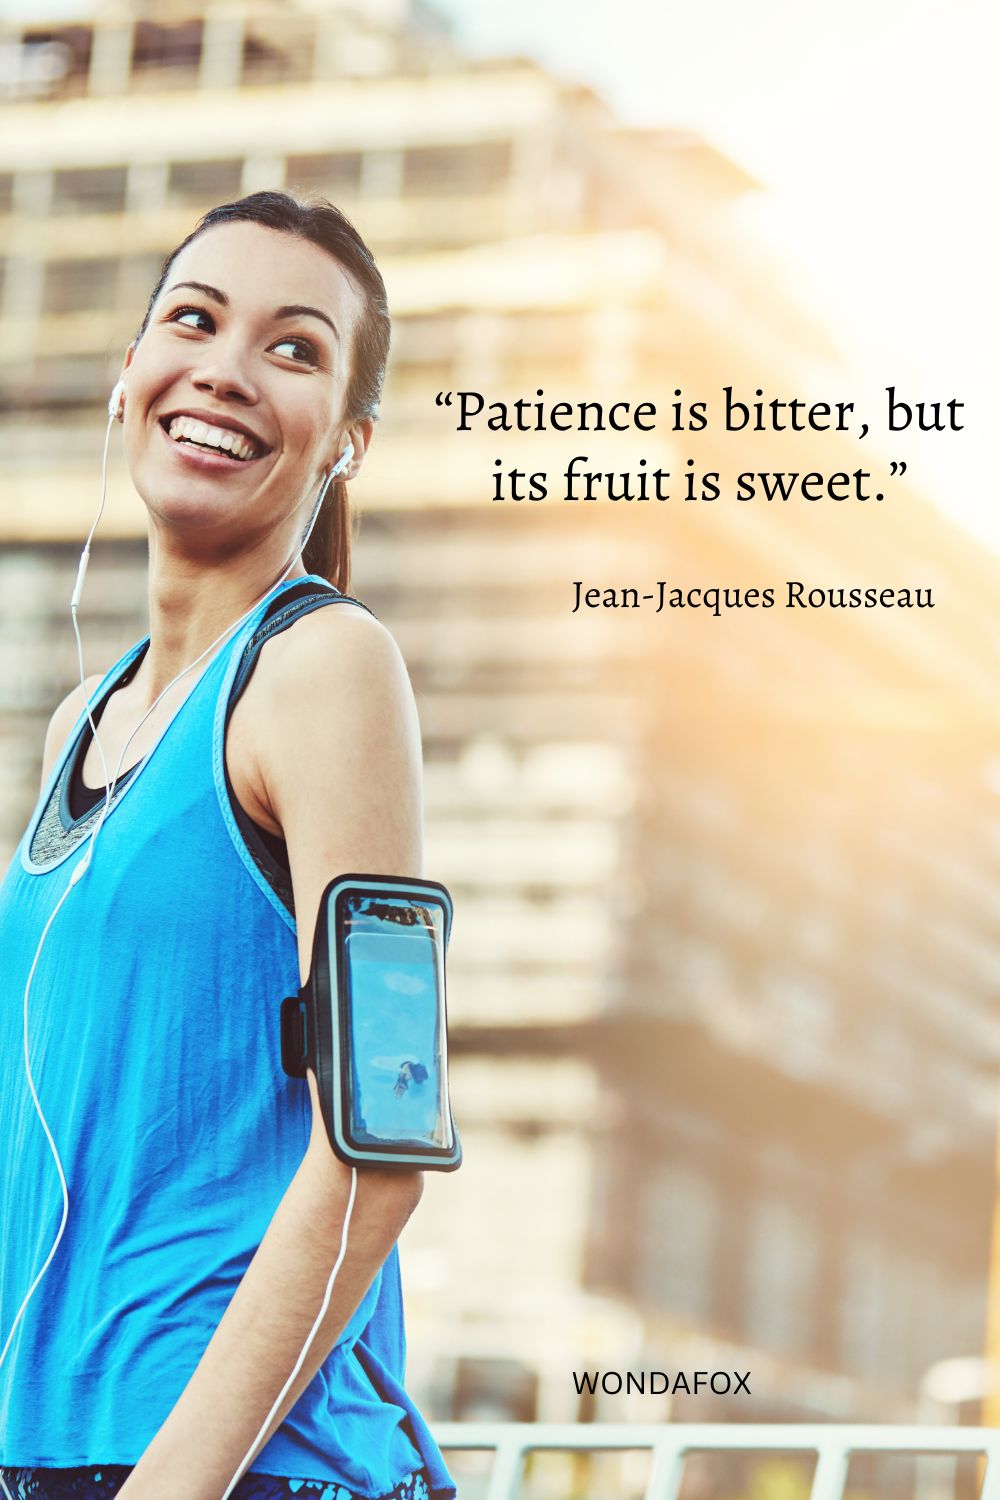 “Patience is bitter, but its fruit is sweet.”
Jean-Jacques Rousseau